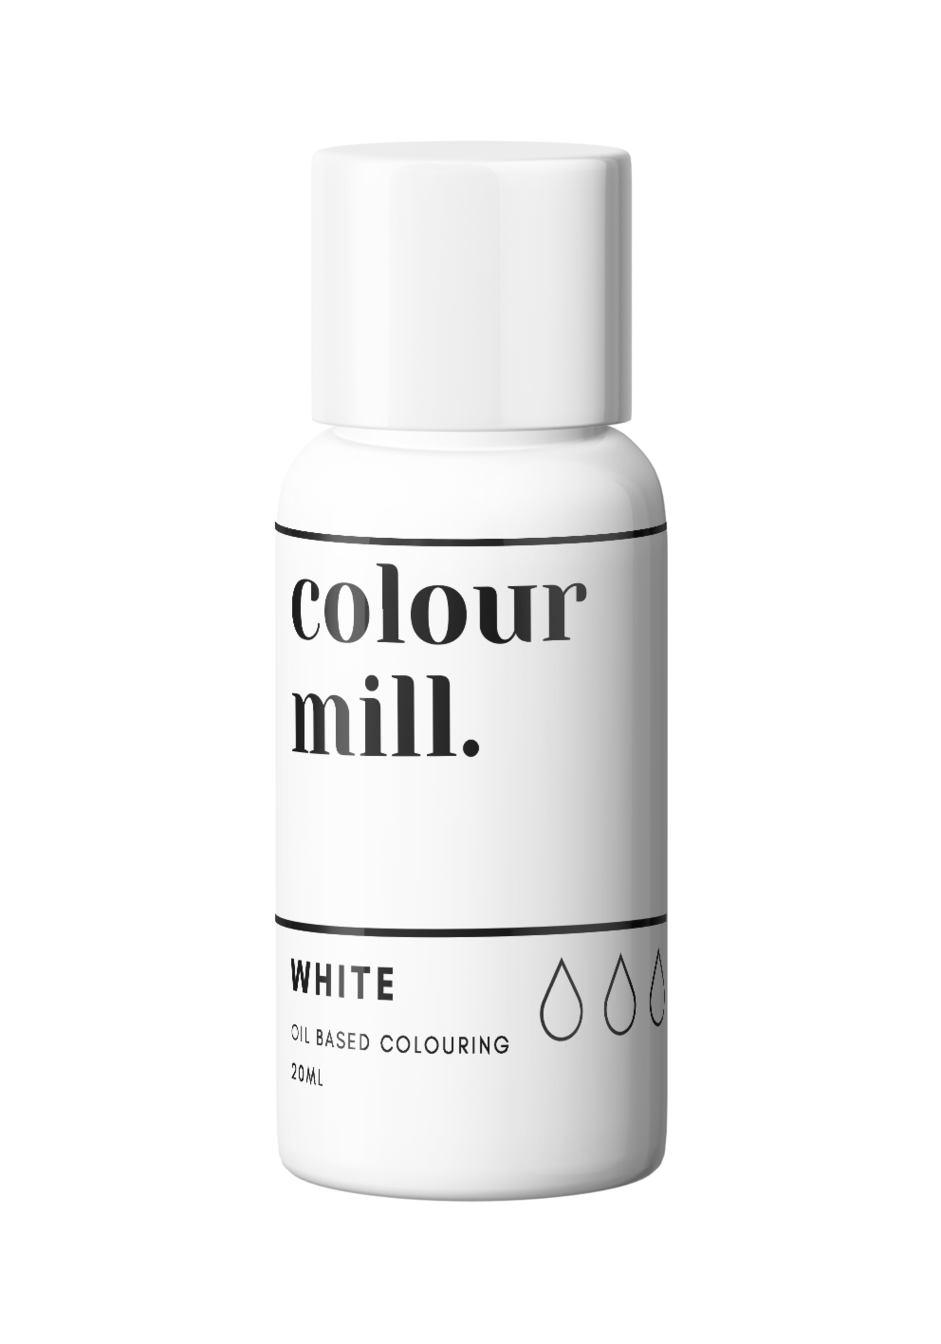 White, 20ml, Colour Mill Oil Based Colouring